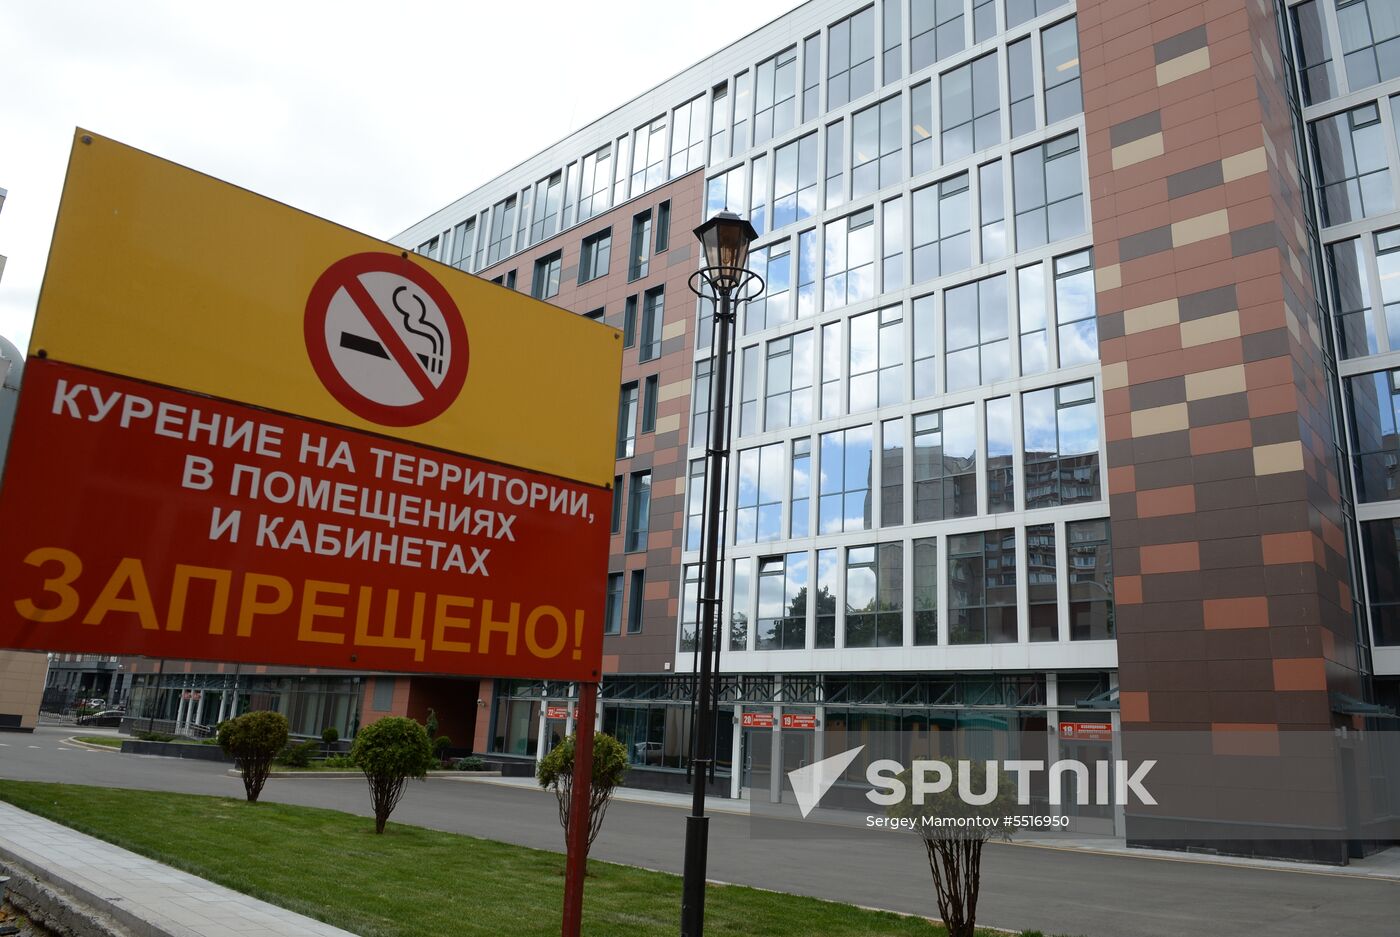 Central entrance in Morozov Children’s Hospital